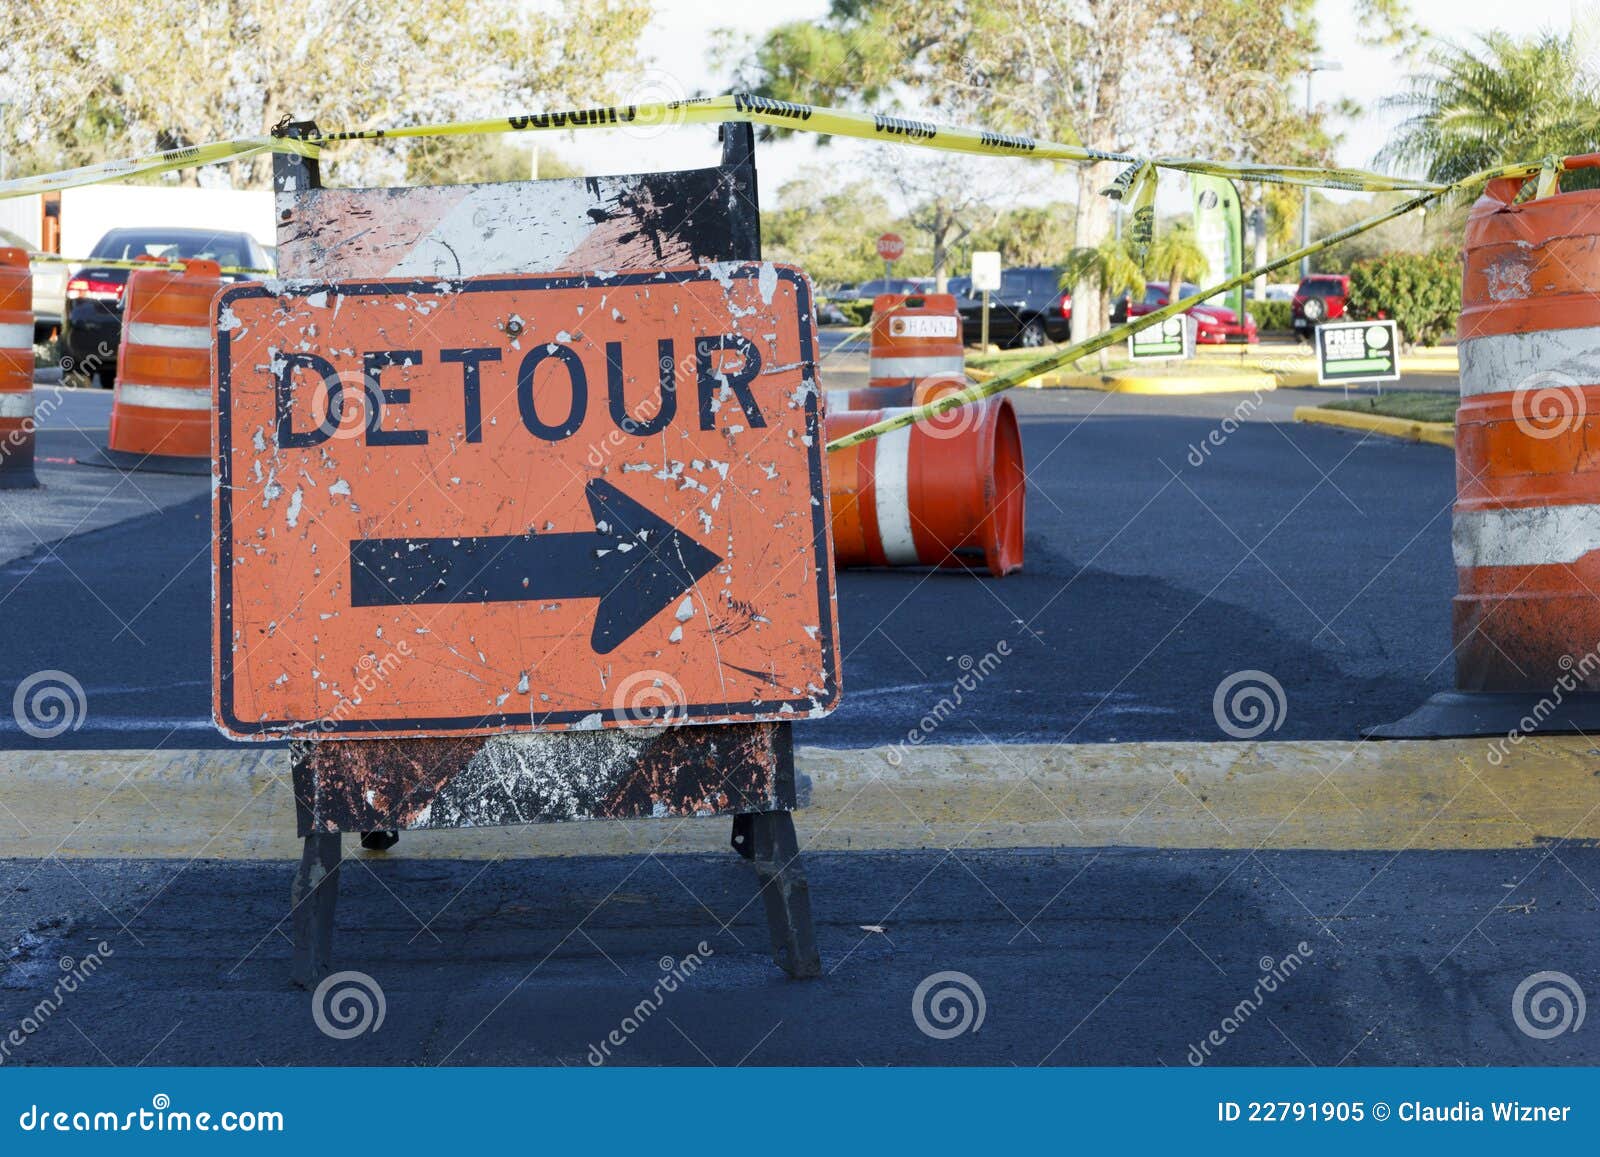 detour sign in roadway